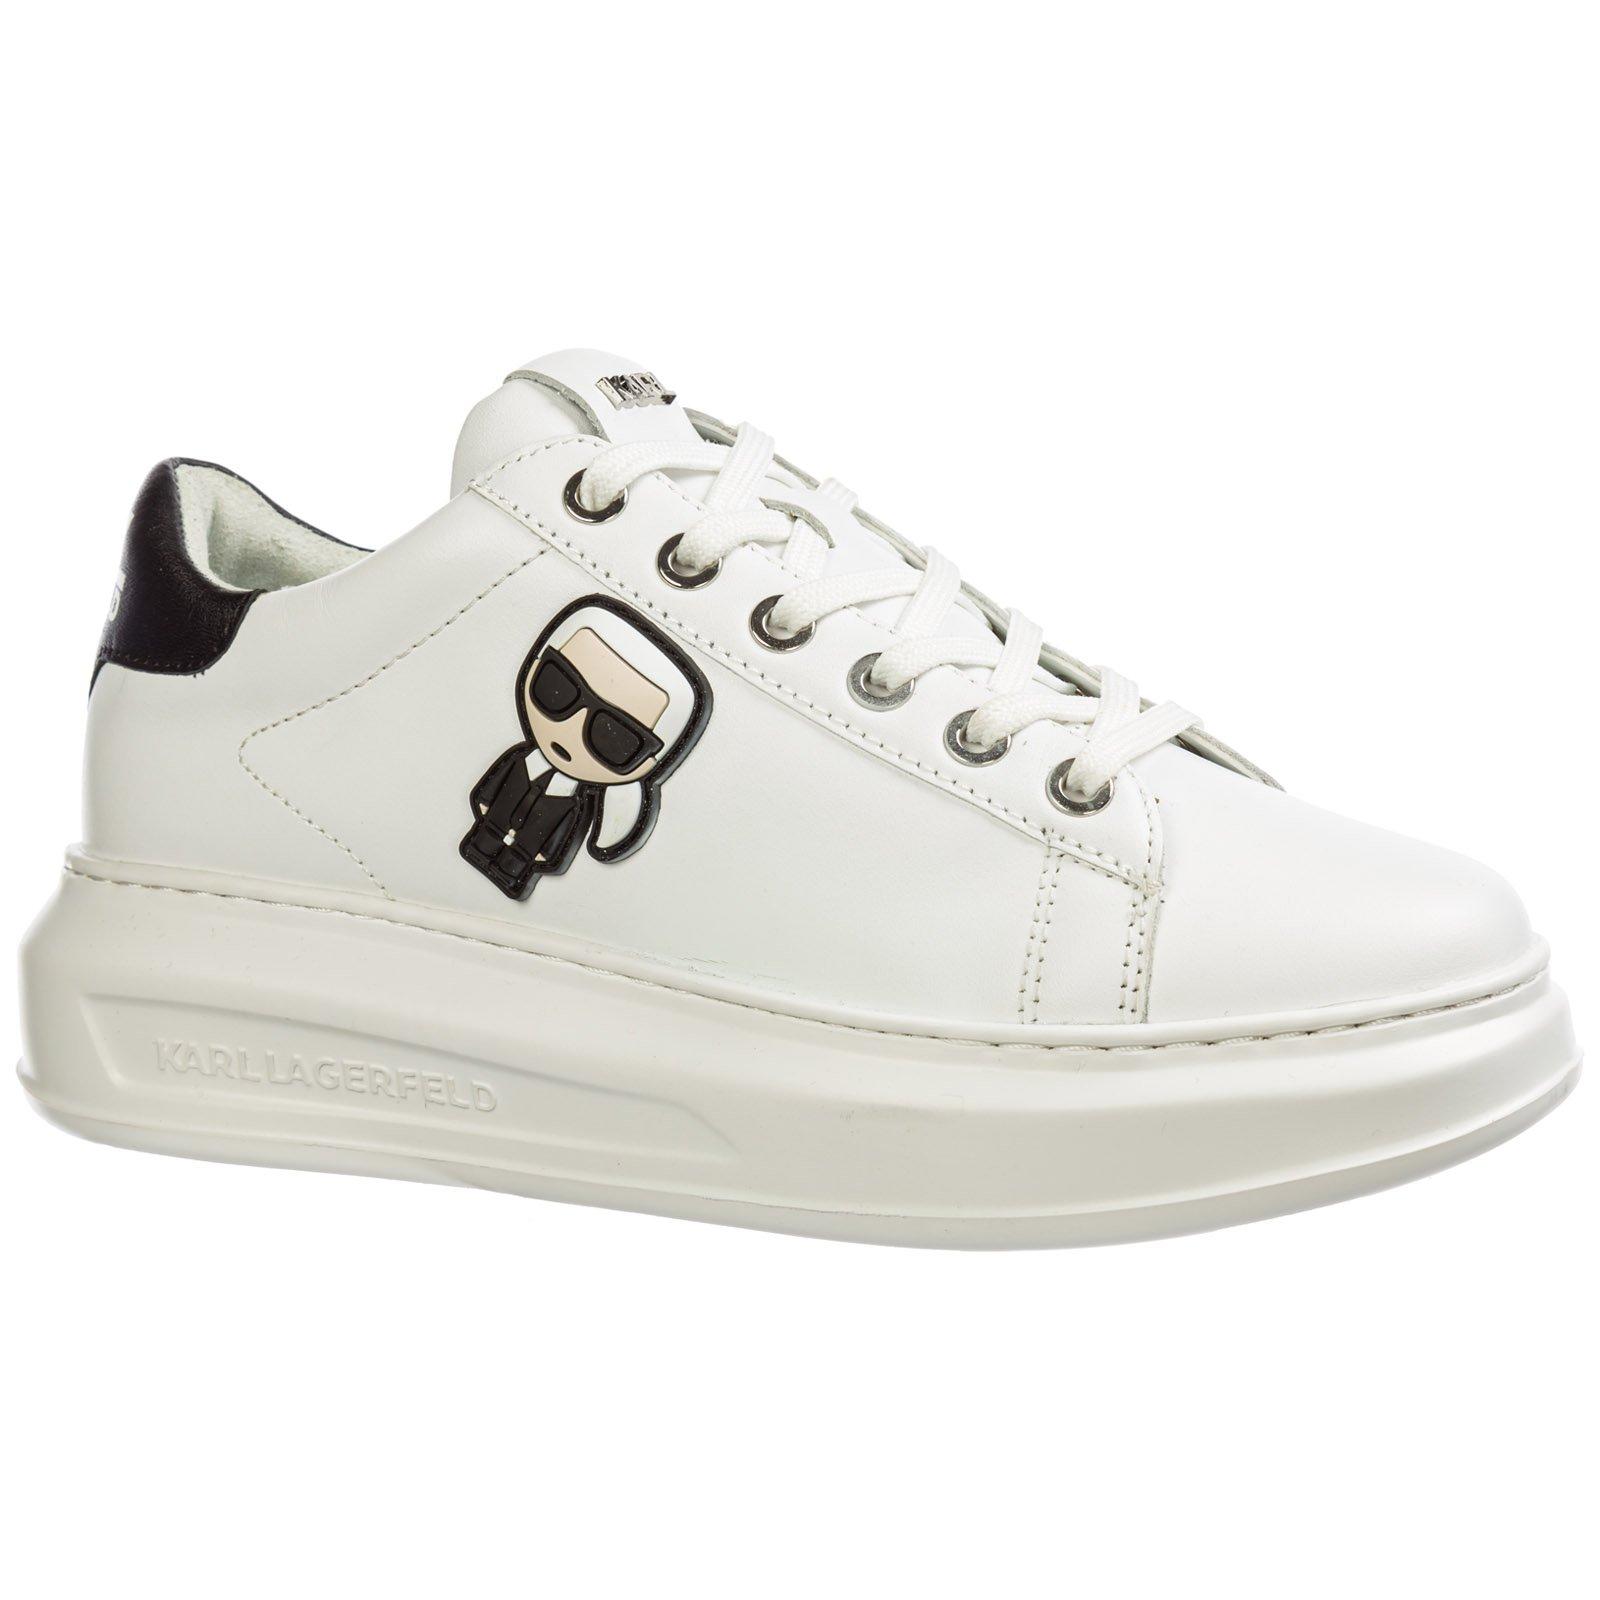 Karl Lagerfeld Leather K/ikonik Kapri Sneakers in White - Lyst